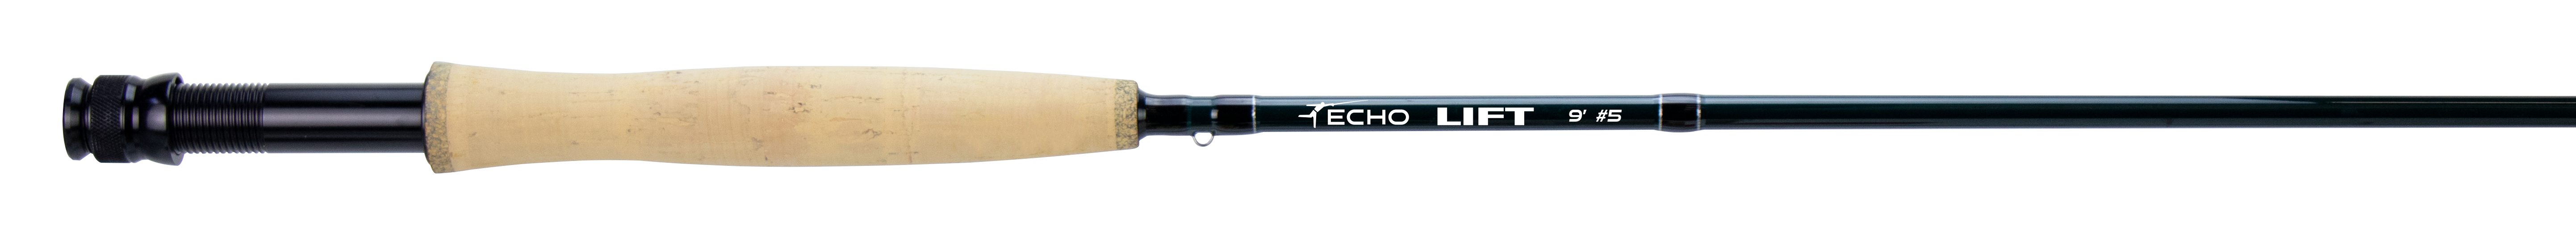 Echo Lift 790 Fly Rod - ReelFlyRod